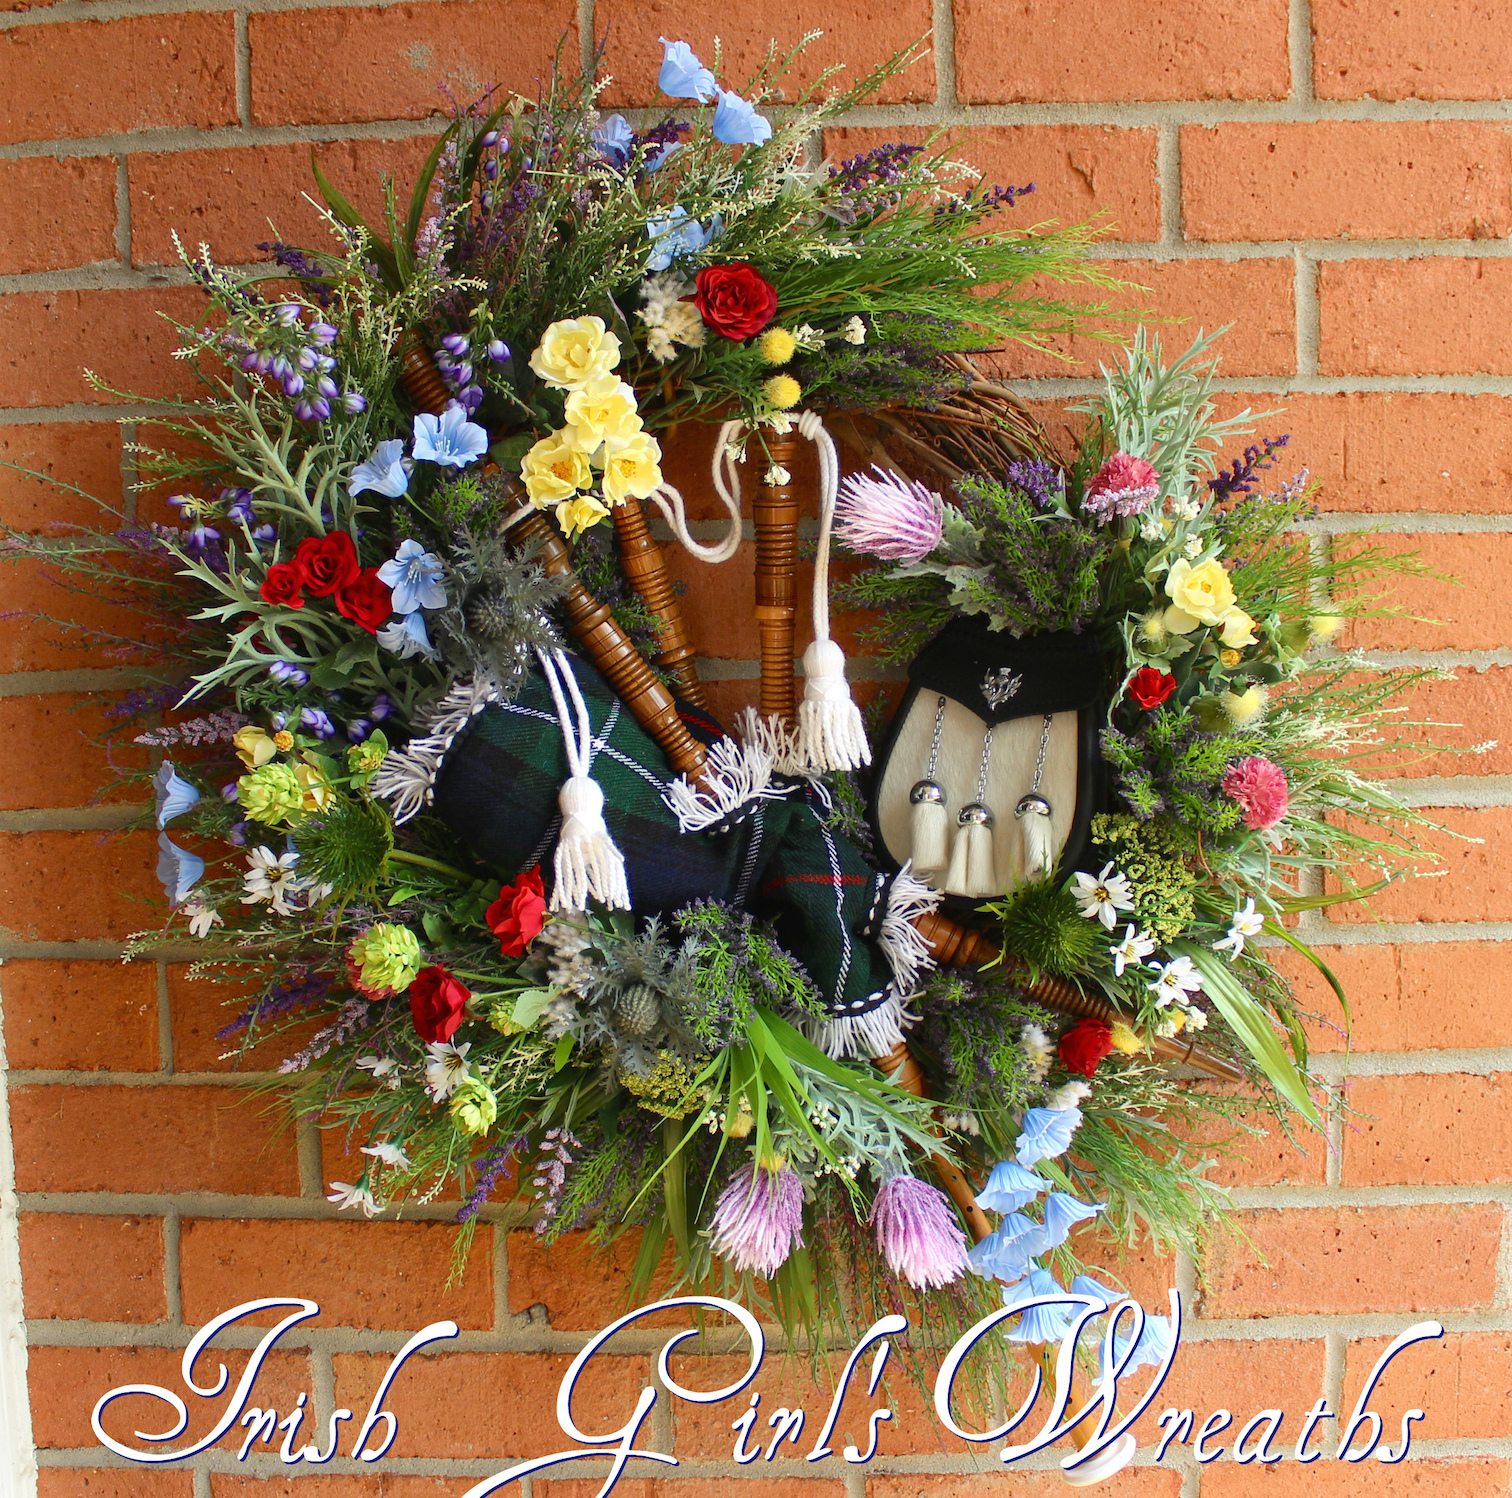 Irish Girl's Wreaths | Top Quality Handmade Artisan Floral Wreaths for